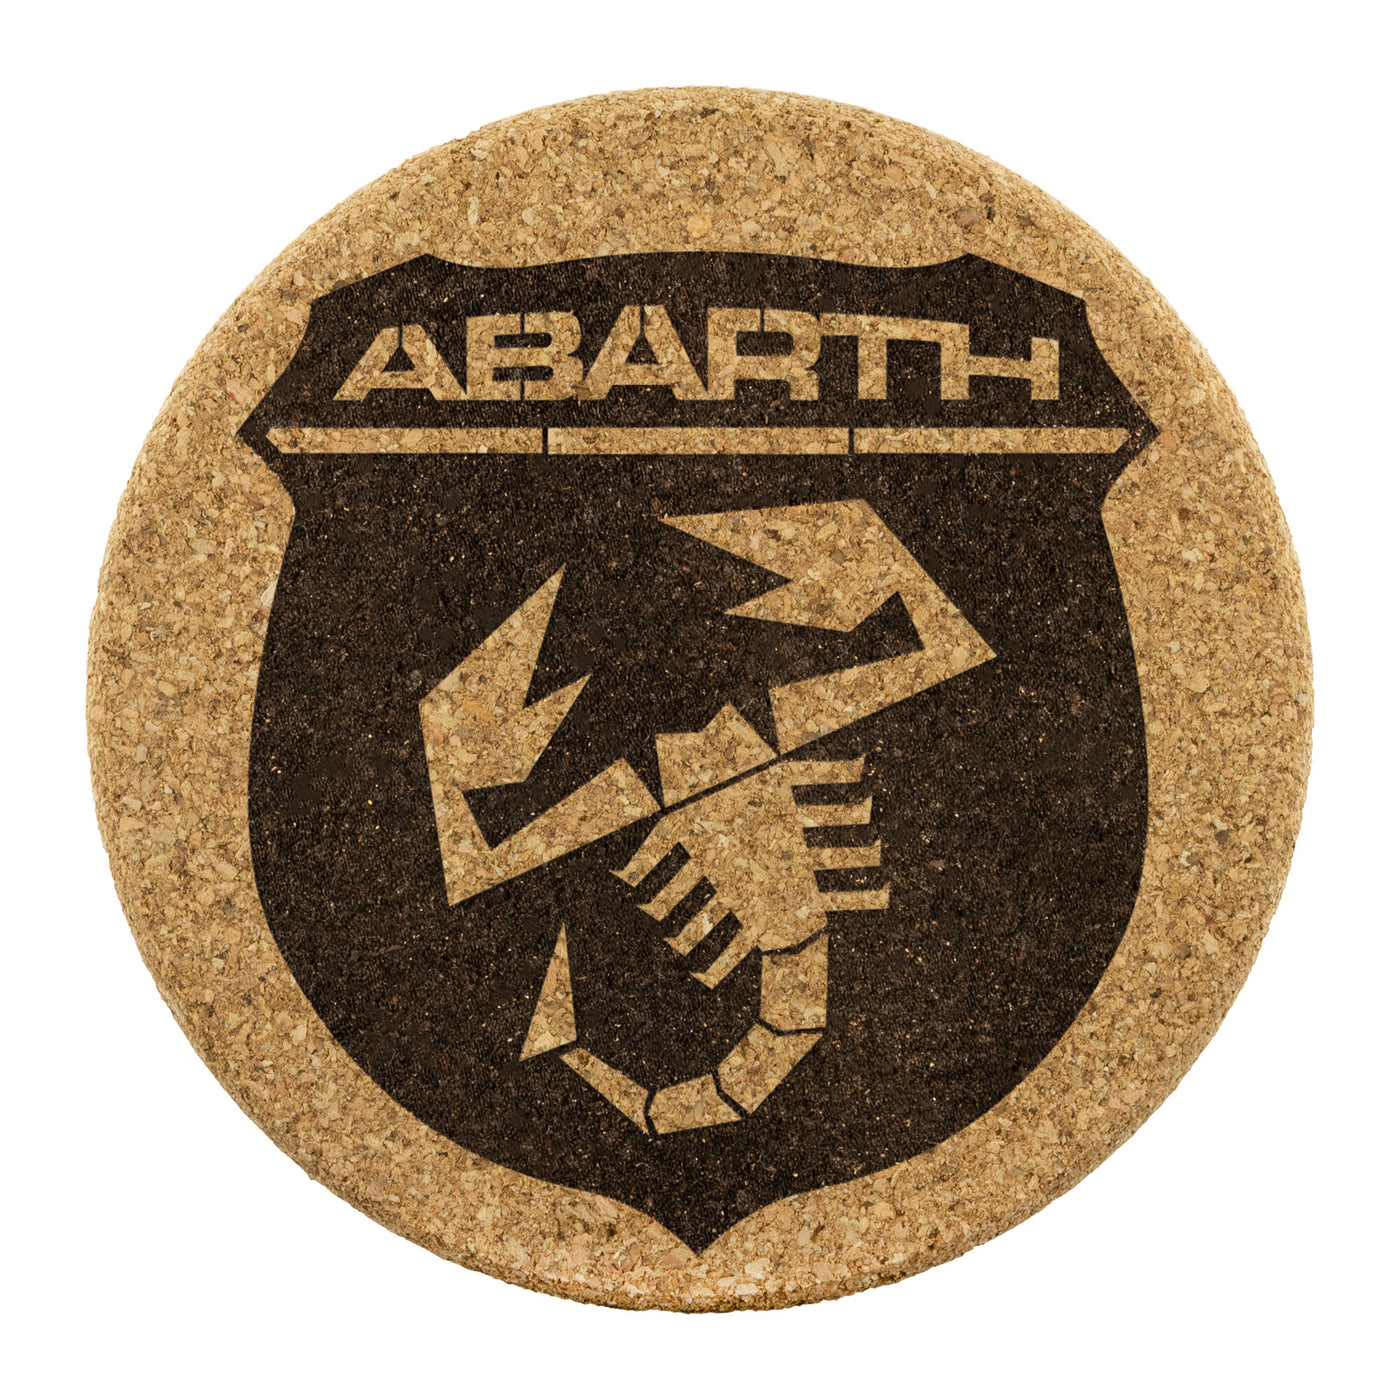 Abarth Cork Coasters (set of 4)